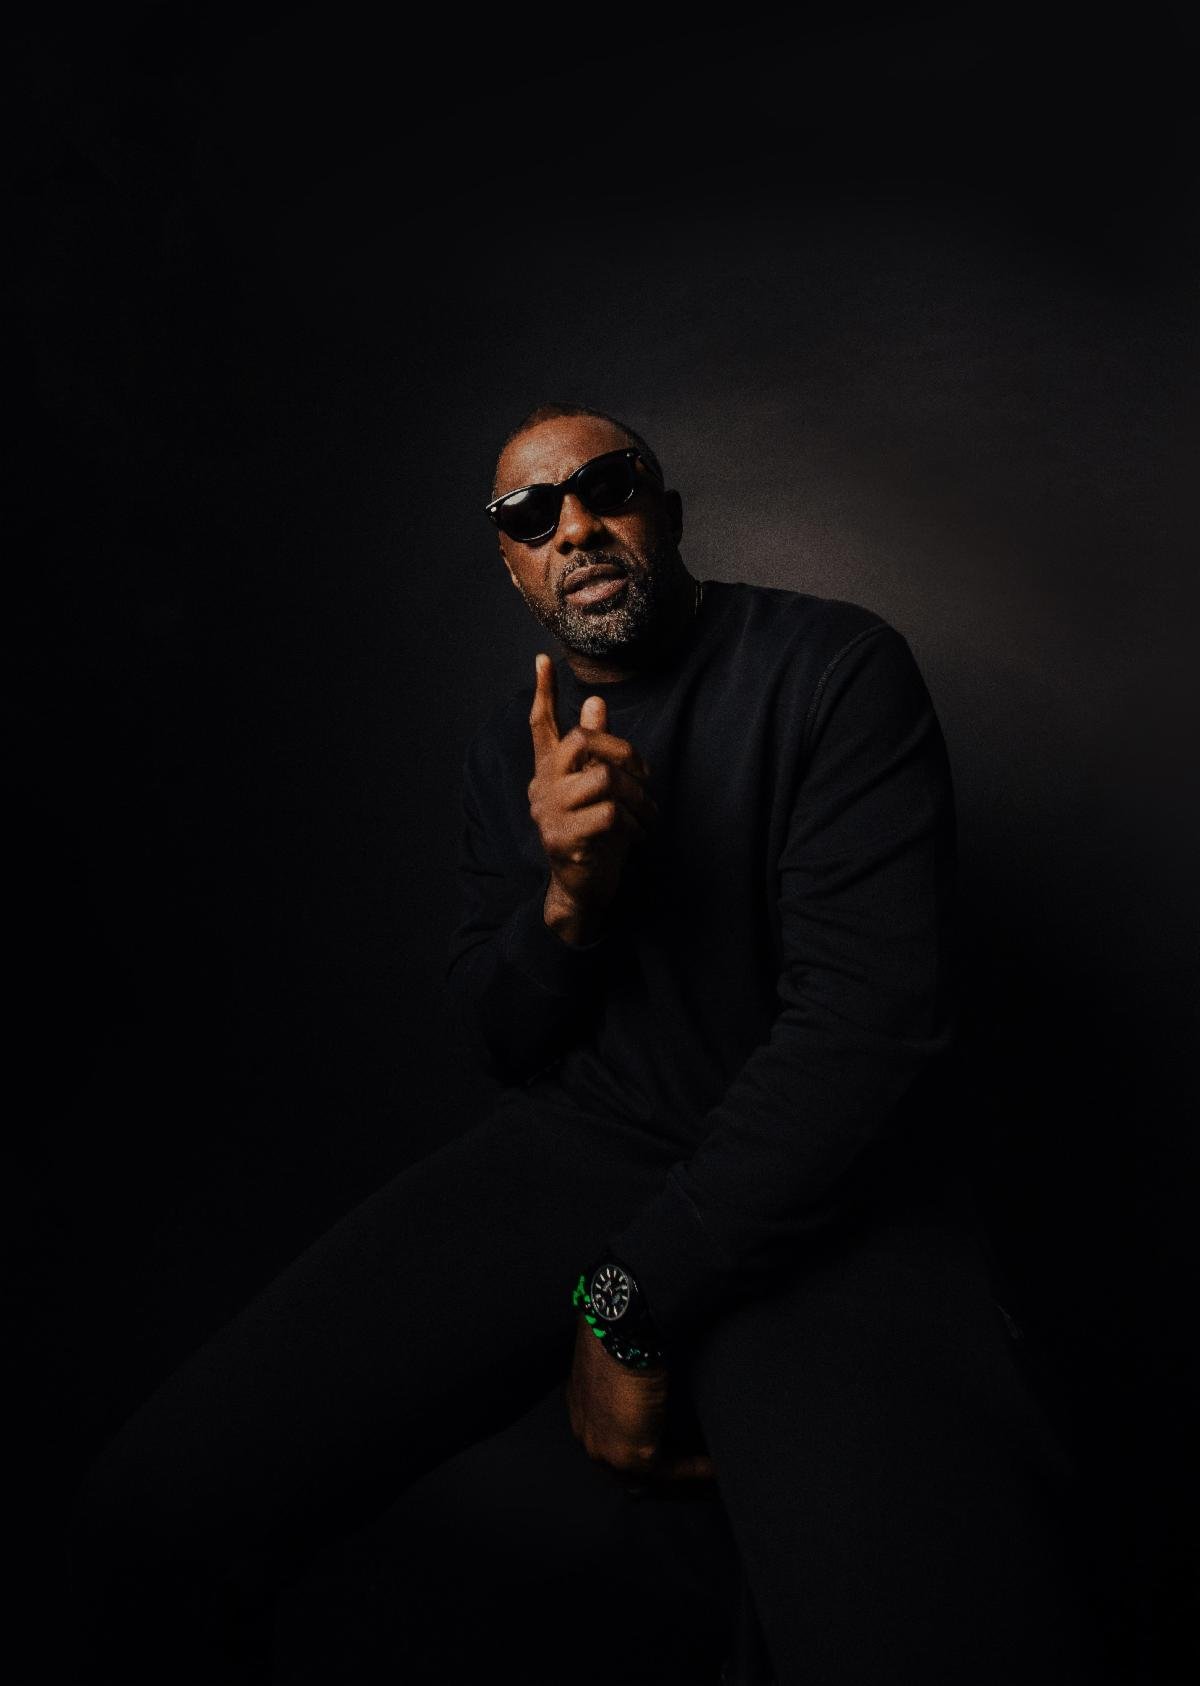 Idris Elba: albums, songs, playlists